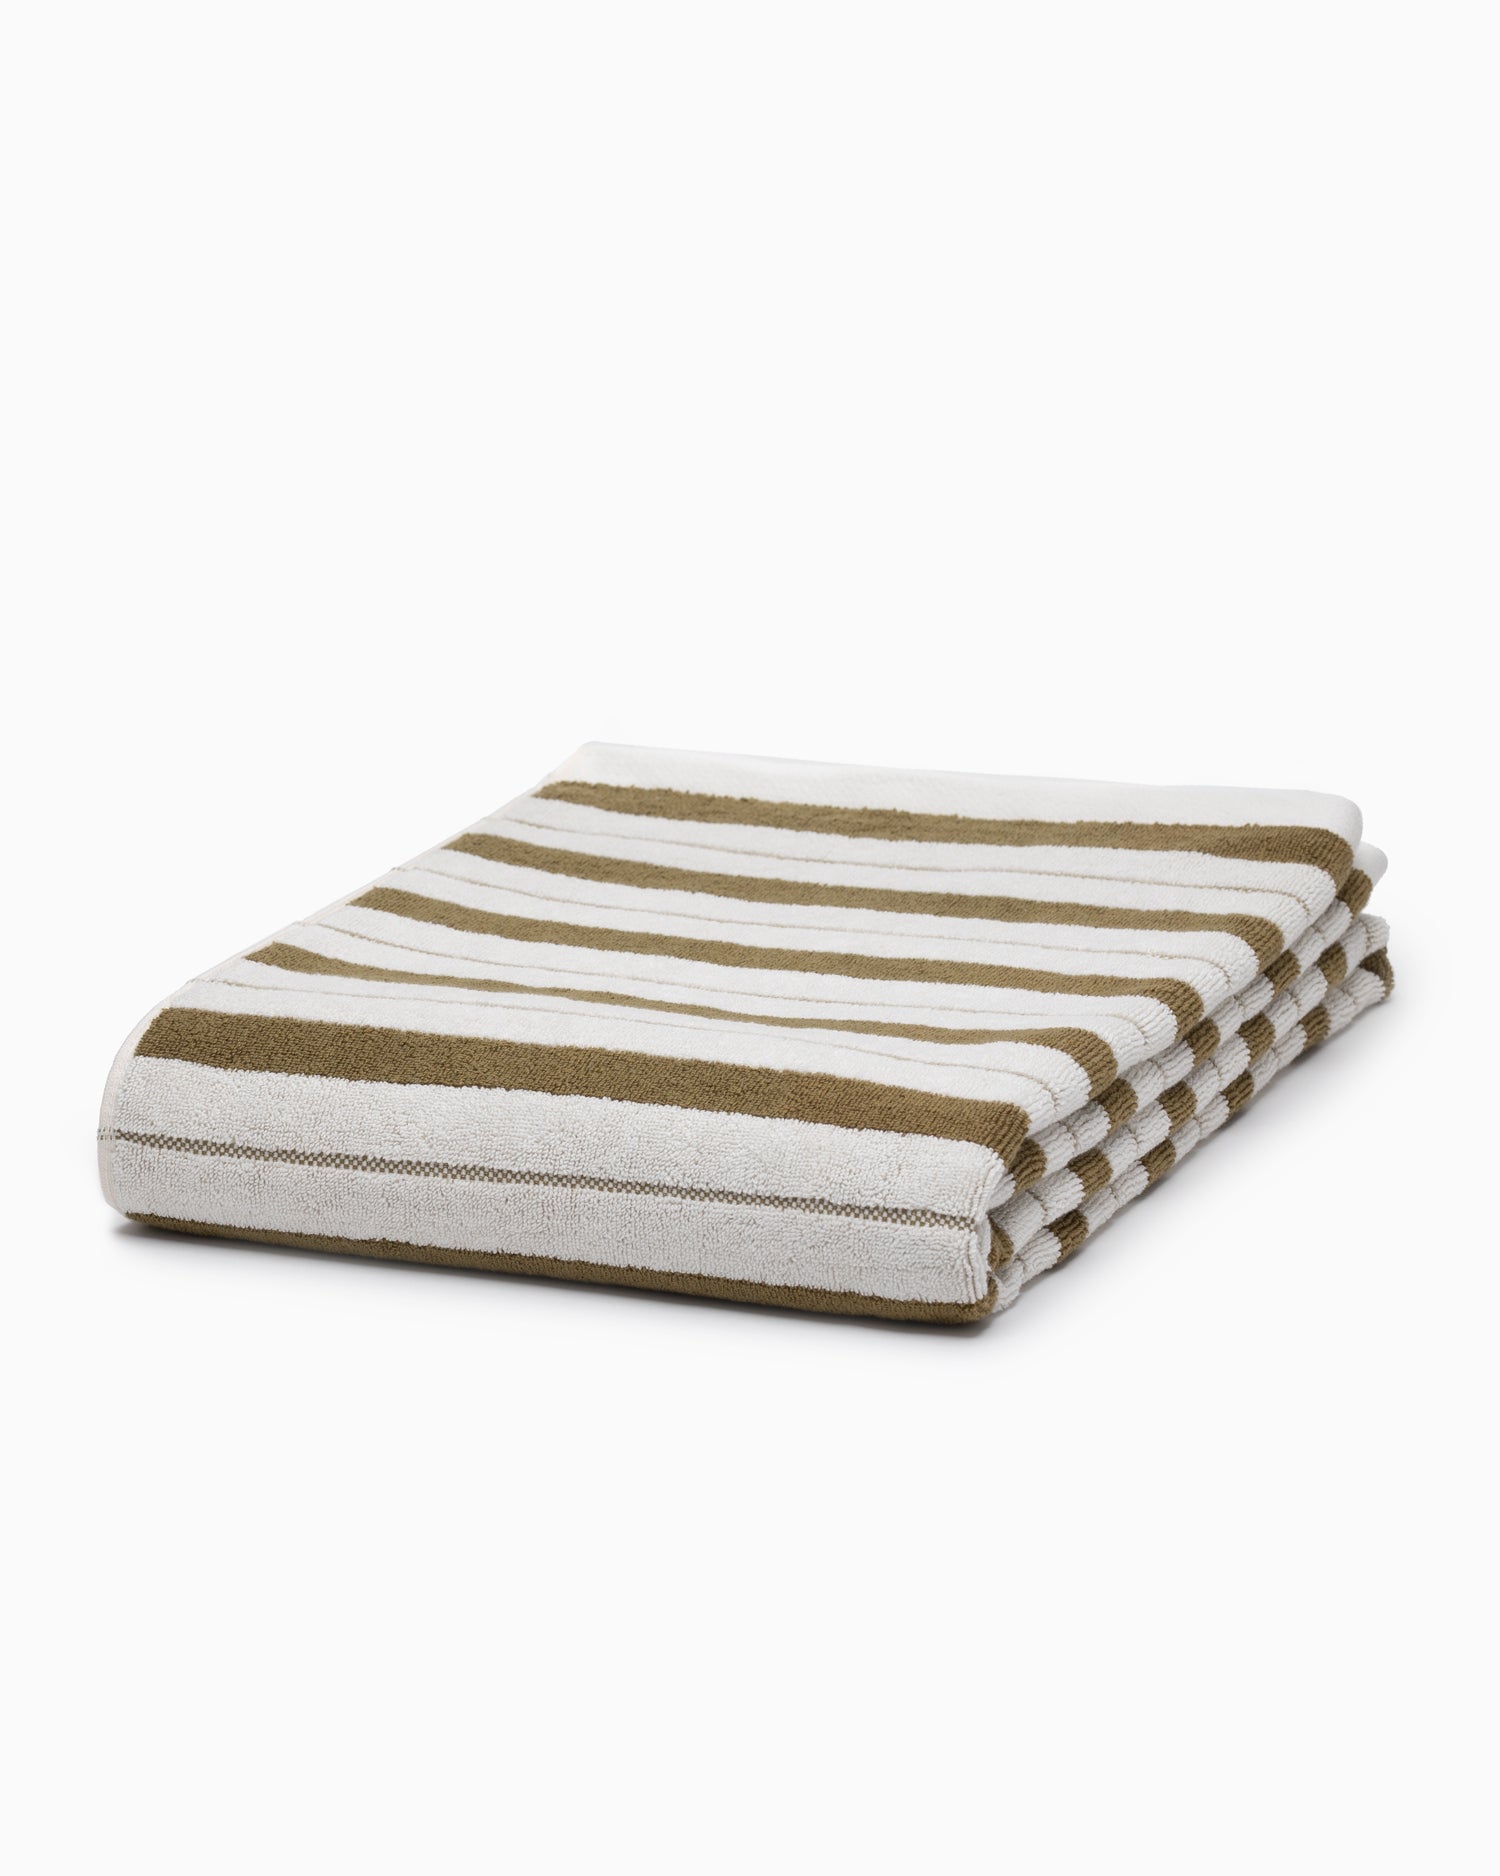 Franklin Bath Towel - Caper / Chalk